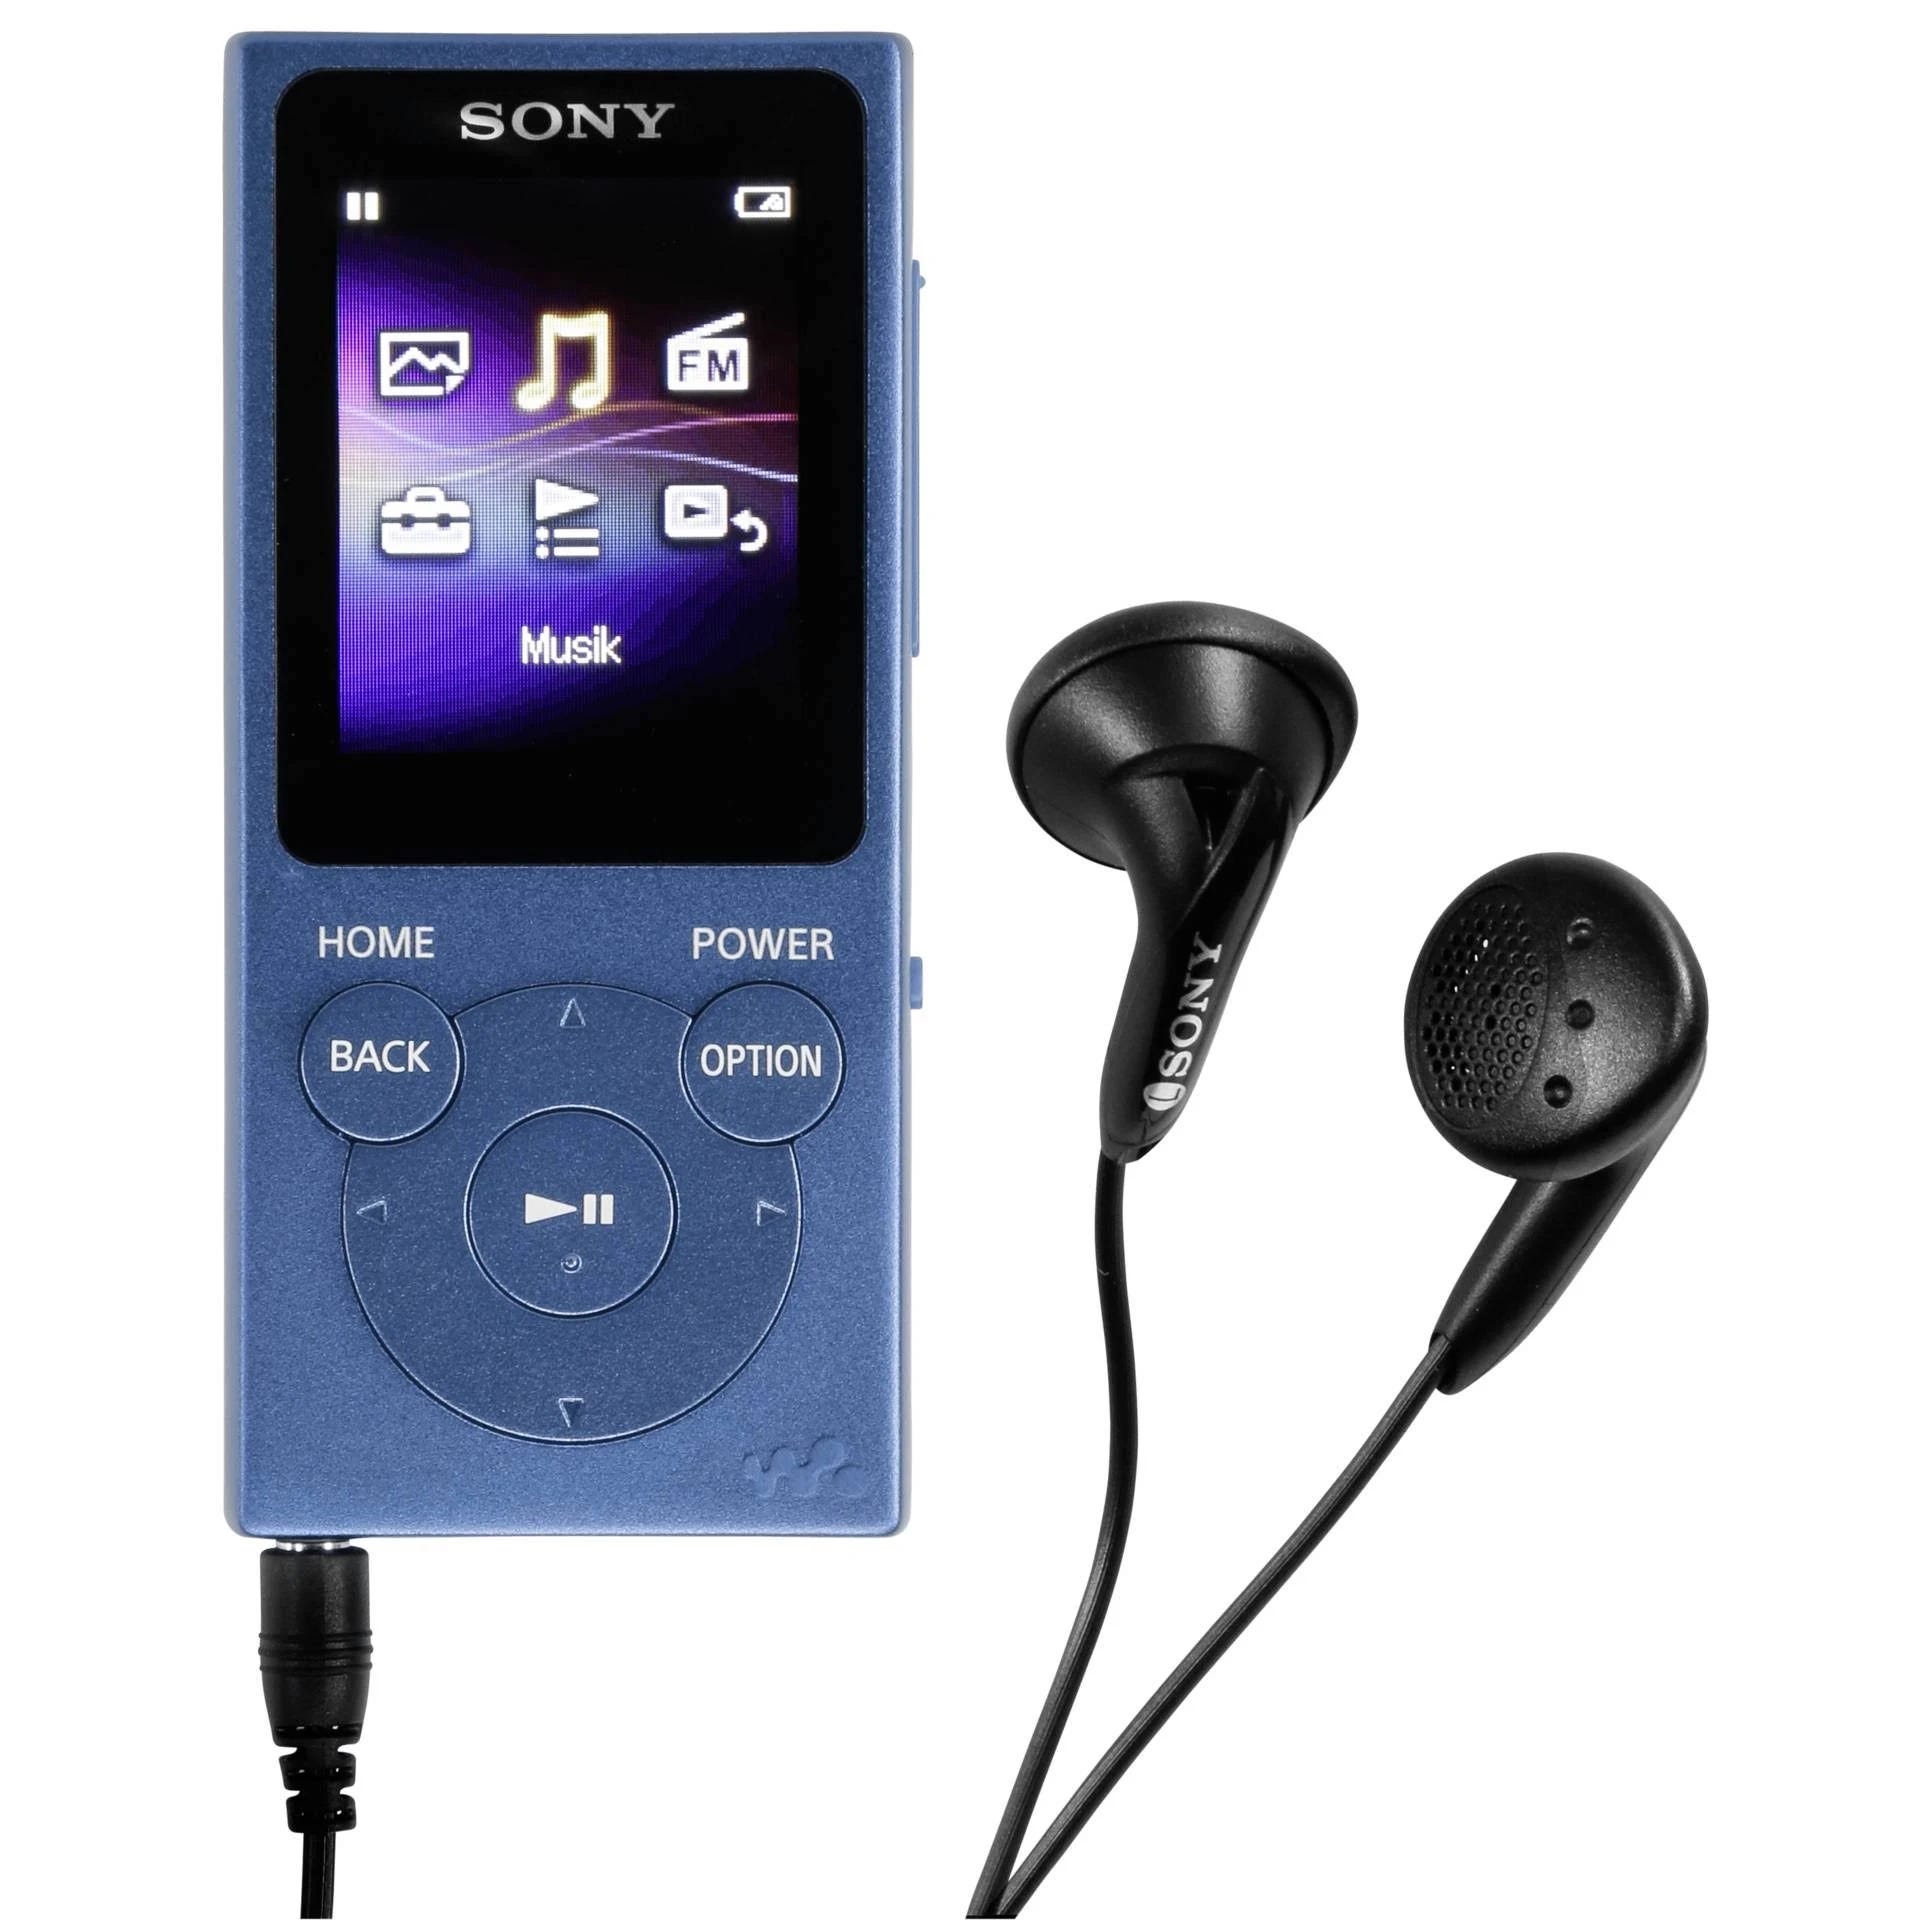 Sony NW-E394 Walkman: Long-Lasting MP3 Player with FM Radio and 8GB Storage | Image